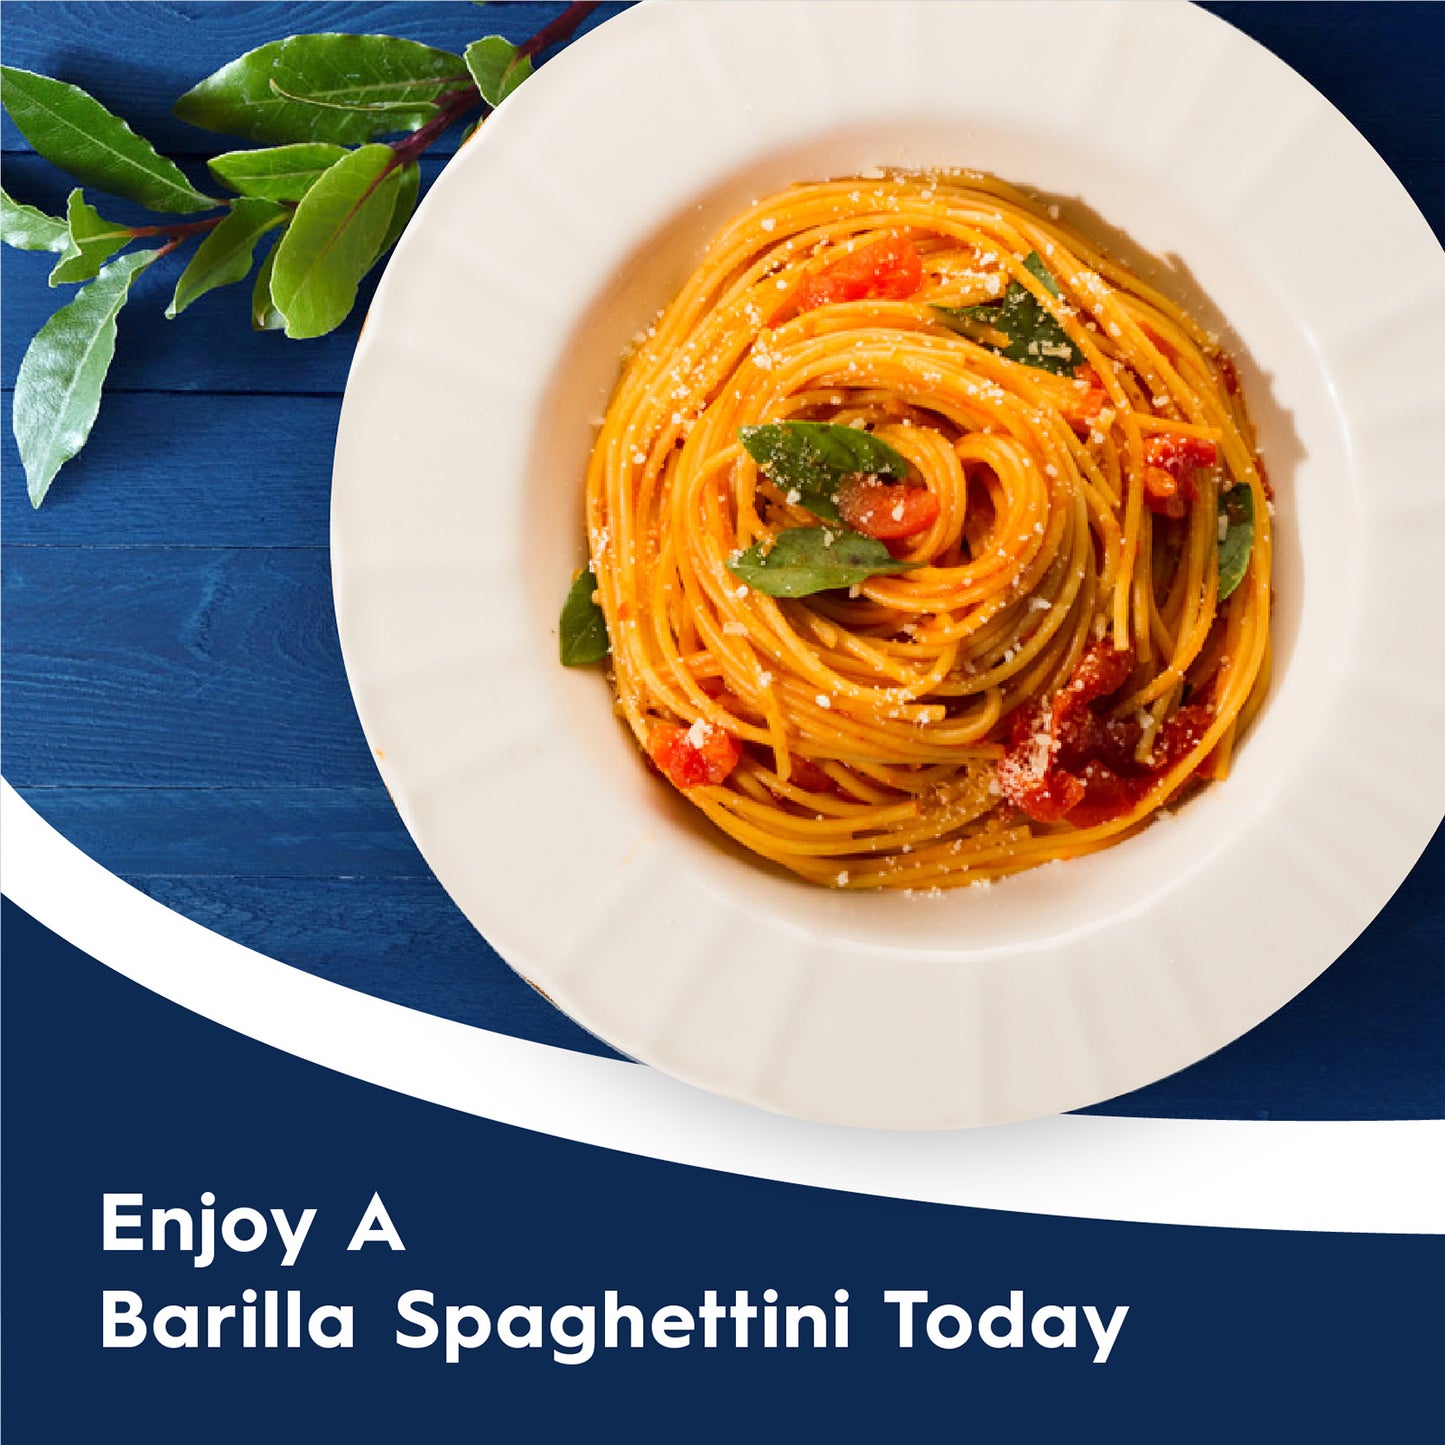 Barilla Spaghettini no.3 (3 PACK X 500G)